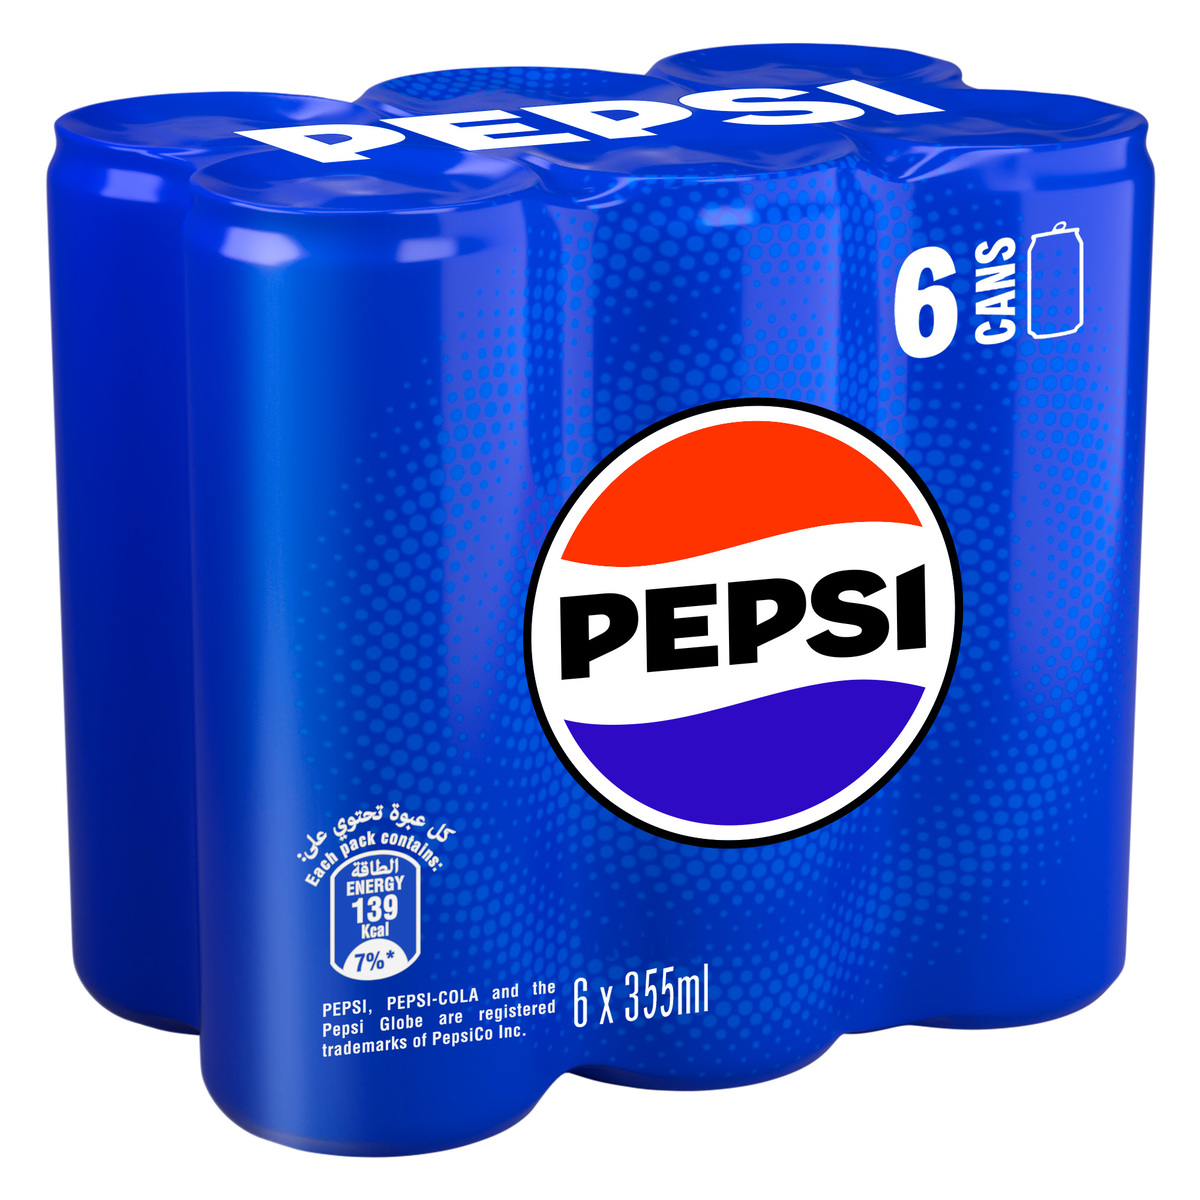 Pepsi Can Cola Beverage 355 ml